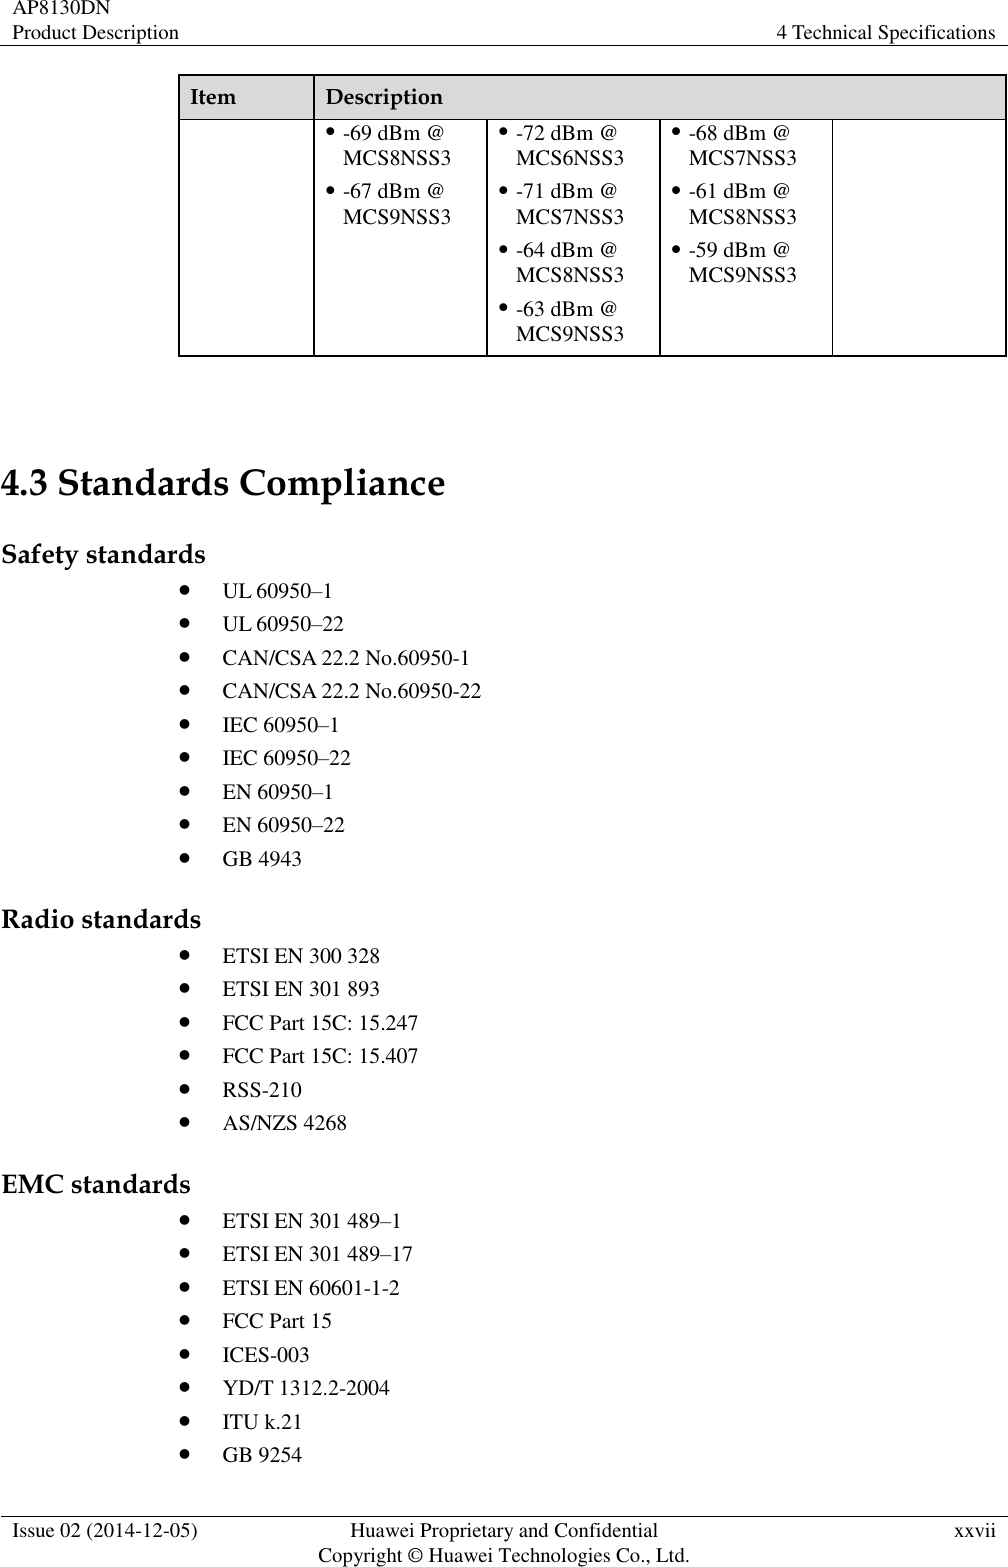 AP8130DN Product Description 4 Technical Specifications  Issue 02 (2014-12-05) Huawei Proprietary and Confidential                                     Copyright © Huawei Technologies Co., Ltd. xxvii  Item Description  -69 dBm @ MCS8NSS3  -67 dBm @ MCS9NSS3  -72 dBm @ MCS6NSS3  -71 dBm @ MCS7NSS3  -64 dBm @ MCS8NSS3  -63 dBm @ MCS9NSS3  -68 dBm @ MCS7NSS3  -61 dBm @ MCS8NSS3  -59 dBm @ MCS9NSS3  4.3 Standards Compliance Safety standards  UL 60950–1  UL 60950–22  CAN/CSA 22.2 No.60950-1  CAN/CSA 22.2 No.60950-22  IEC 60950–1  IEC 60950–22  EN 60950–1  EN 60950–22  GB 4943 Radio standards  ETSI EN 300 328  ETSI EN 301 893    FCC Part 15C: 15.247  FCC Part 15C: 15.407    RSS-210  AS/NZS 4268 EMC standards  ETSI EN 301 489–1  ETSI EN 301 489–17  ETSI EN 60601-1-2    FCC Part 15  ICES-003  YD/T 1312.2-2004  ITU k.21  GB 9254 